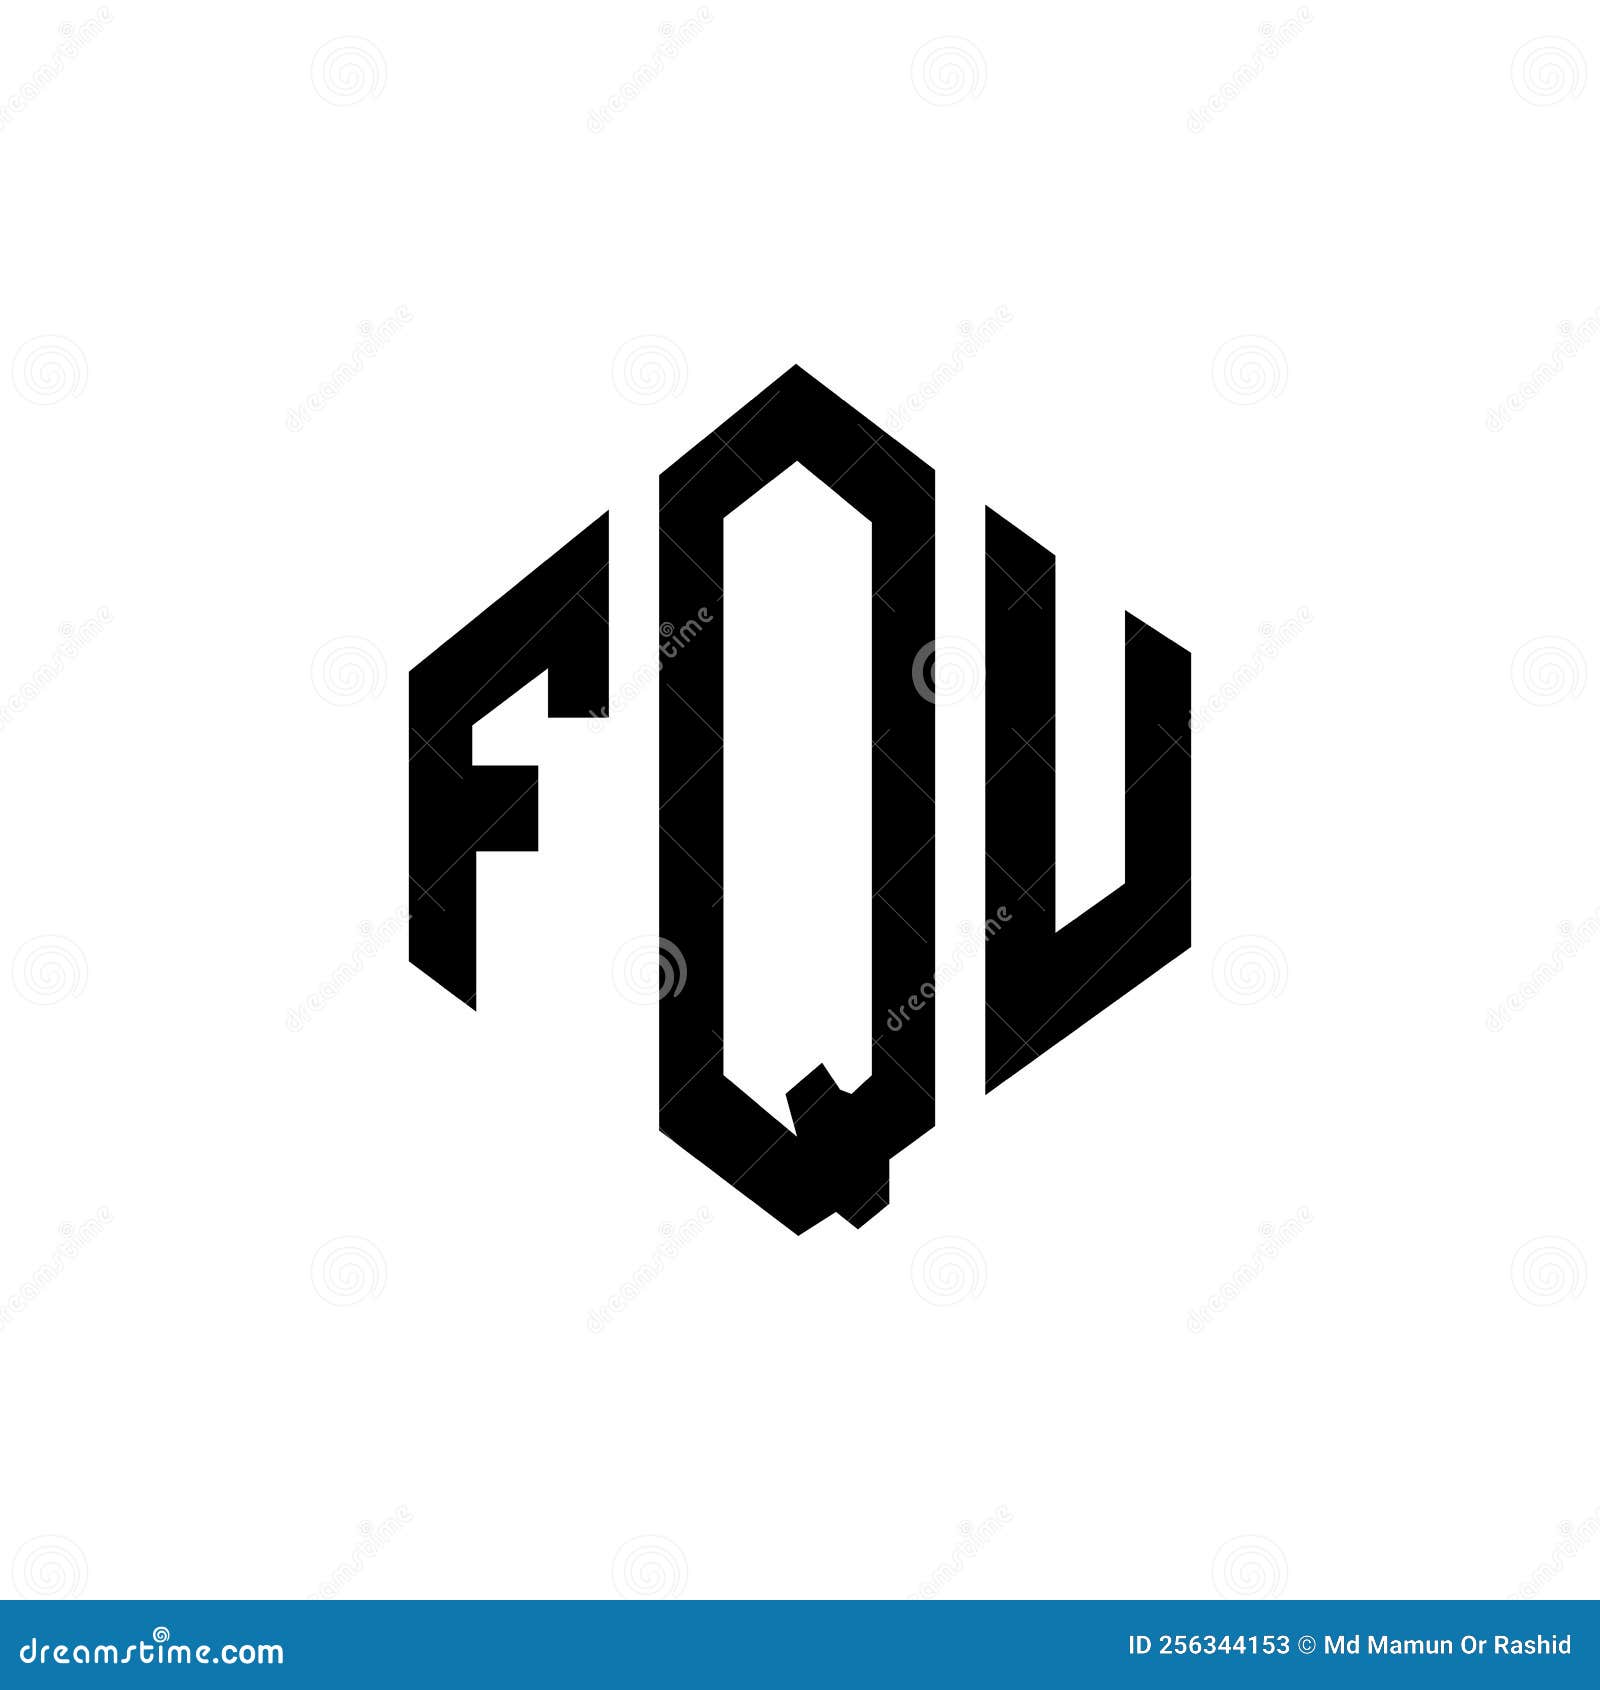 fqu-letter-logo-design-with-polygon-shape-fqu-polygon-and-cube-shape